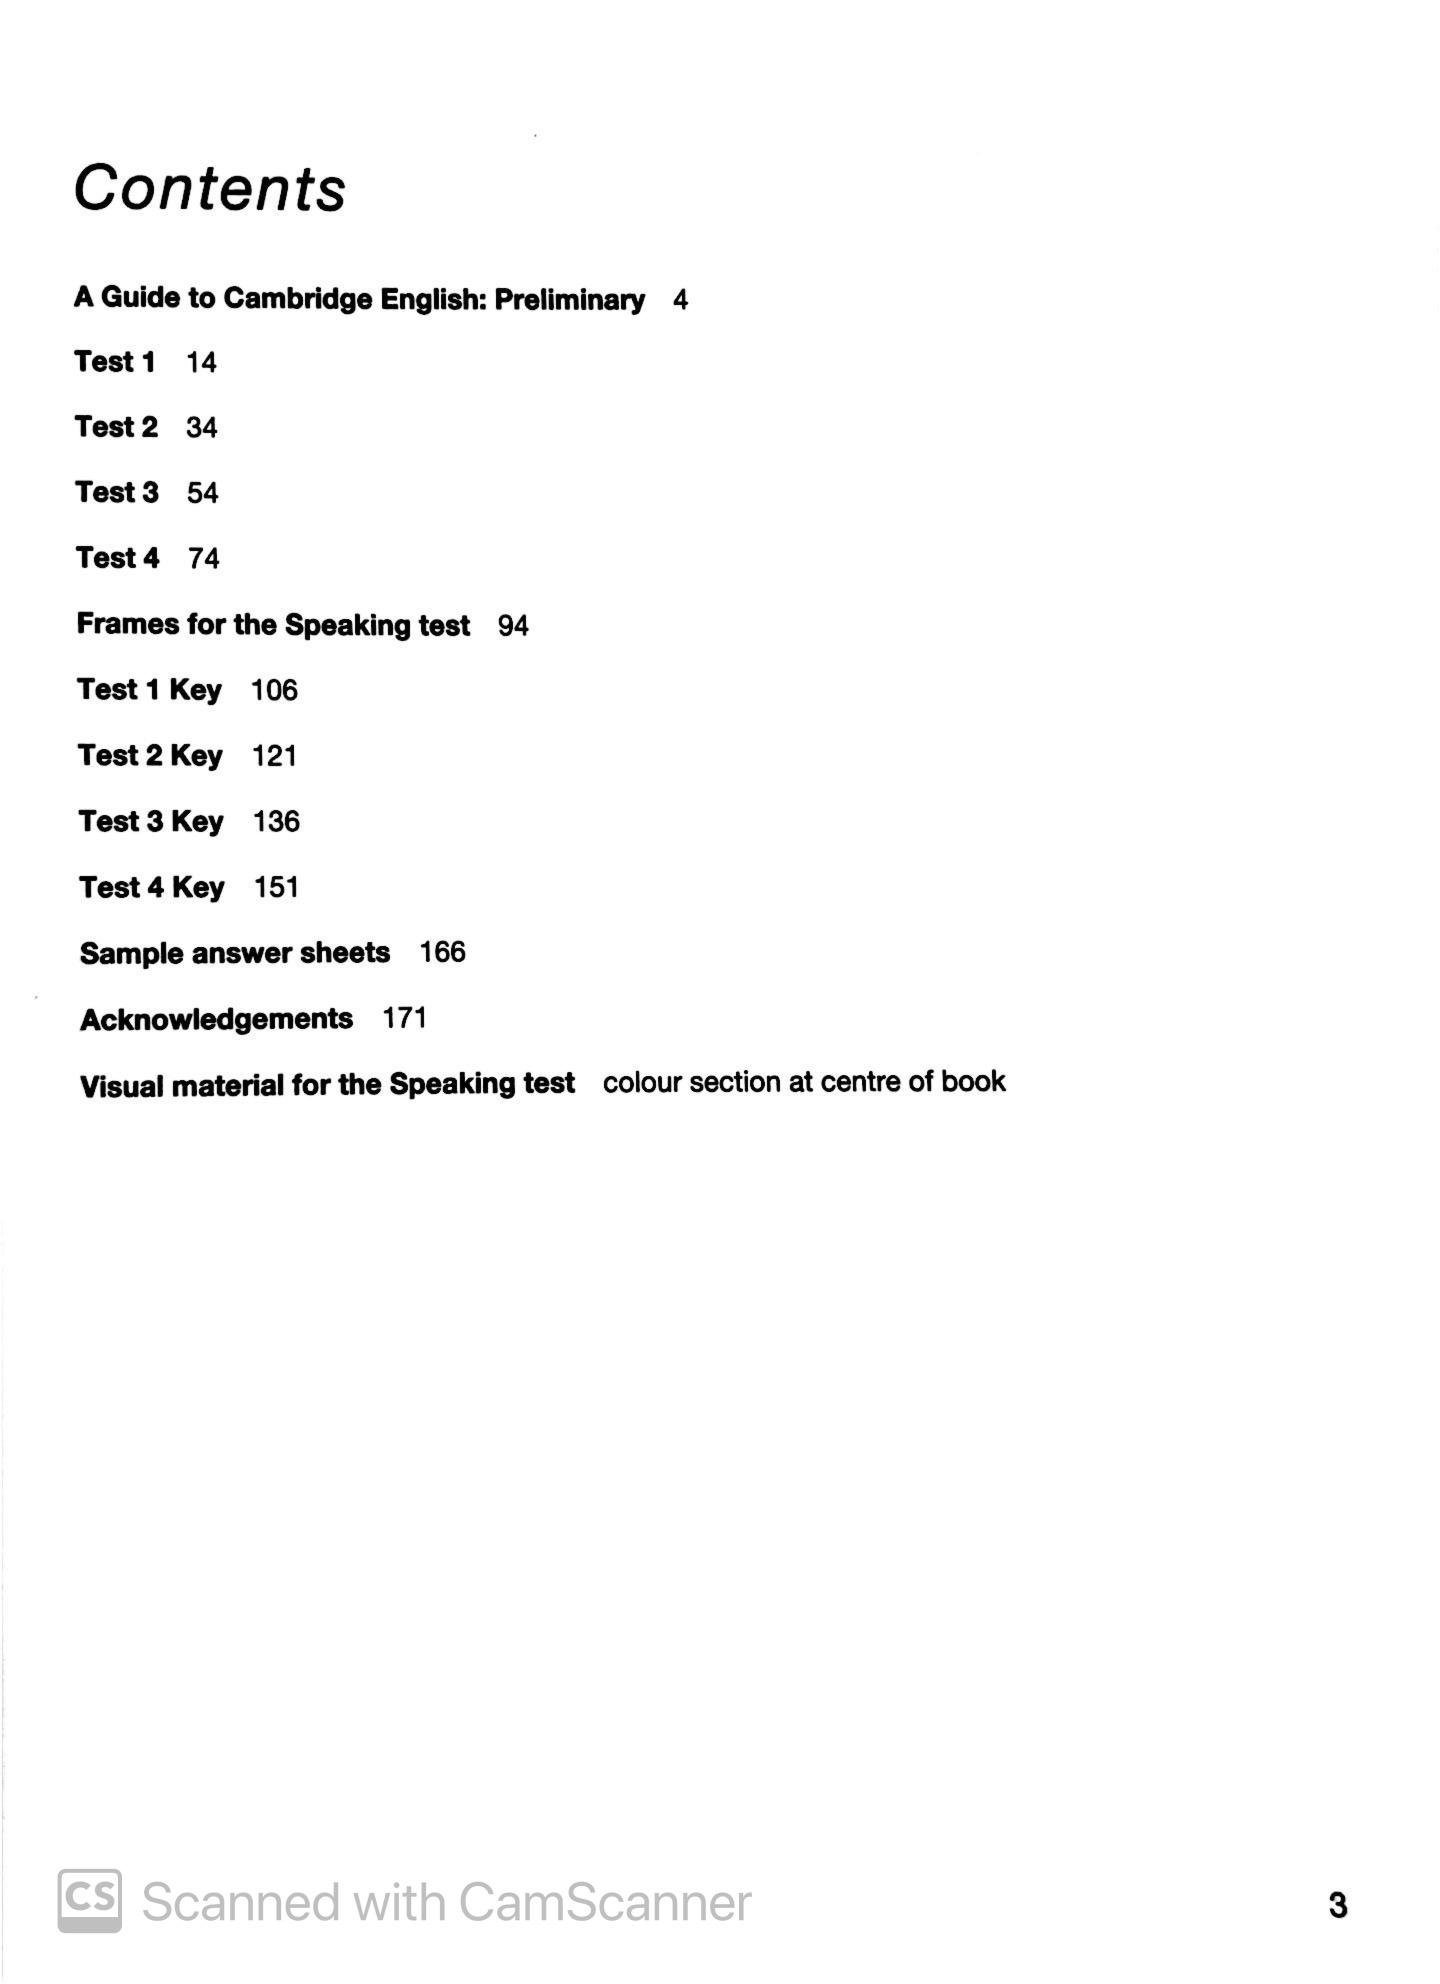 Hình ảnh Cambridge English Preliminary - Preliminary English Test 8 with Answers (reprint edition)